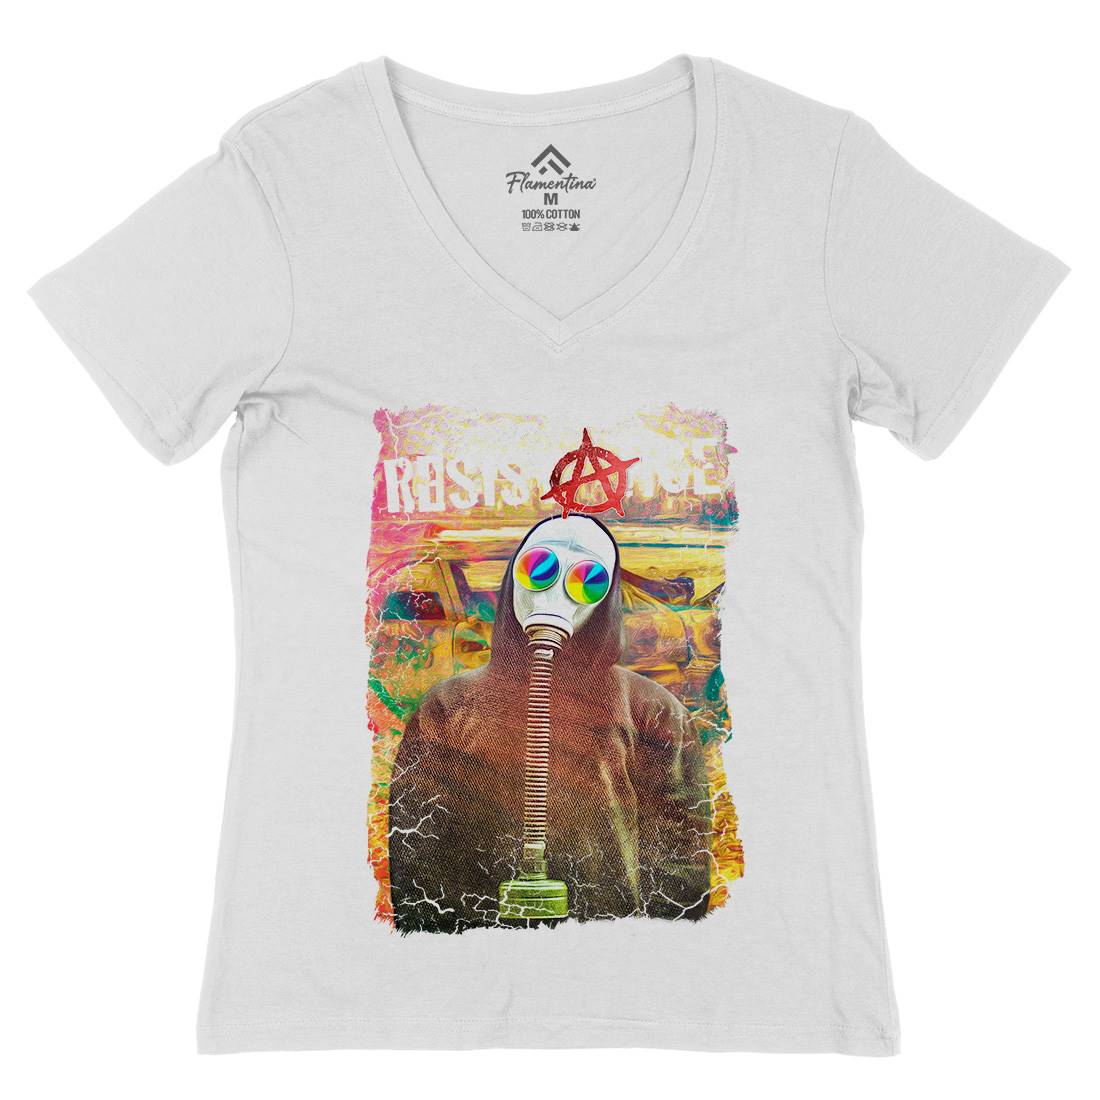 Resistance Womens Organic V-Neck T-Shirt Illuminati A898